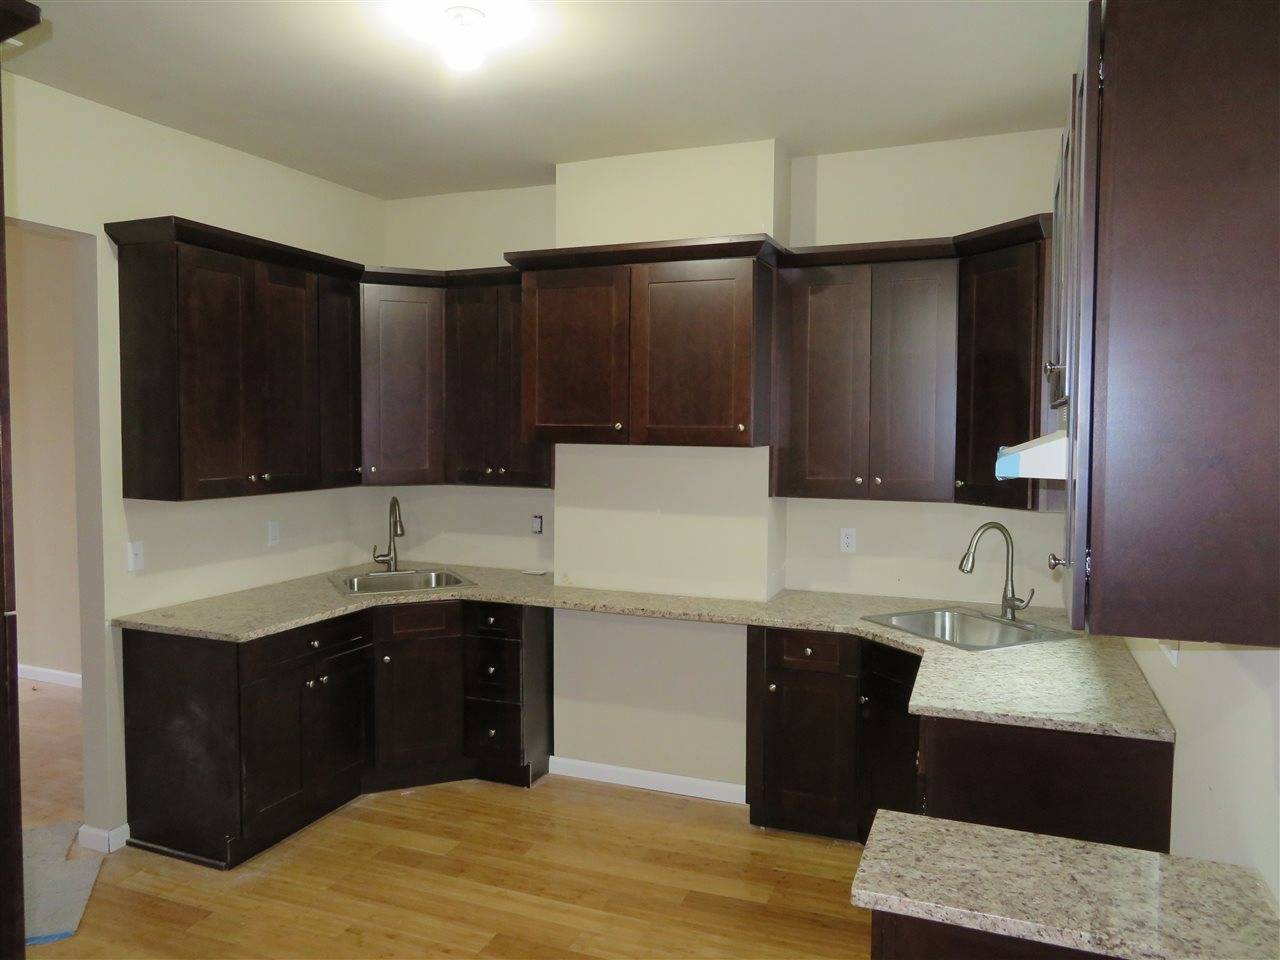 Brand new huge full 1 family house for rent - 5 BR Bergen Lafayette New Jersey